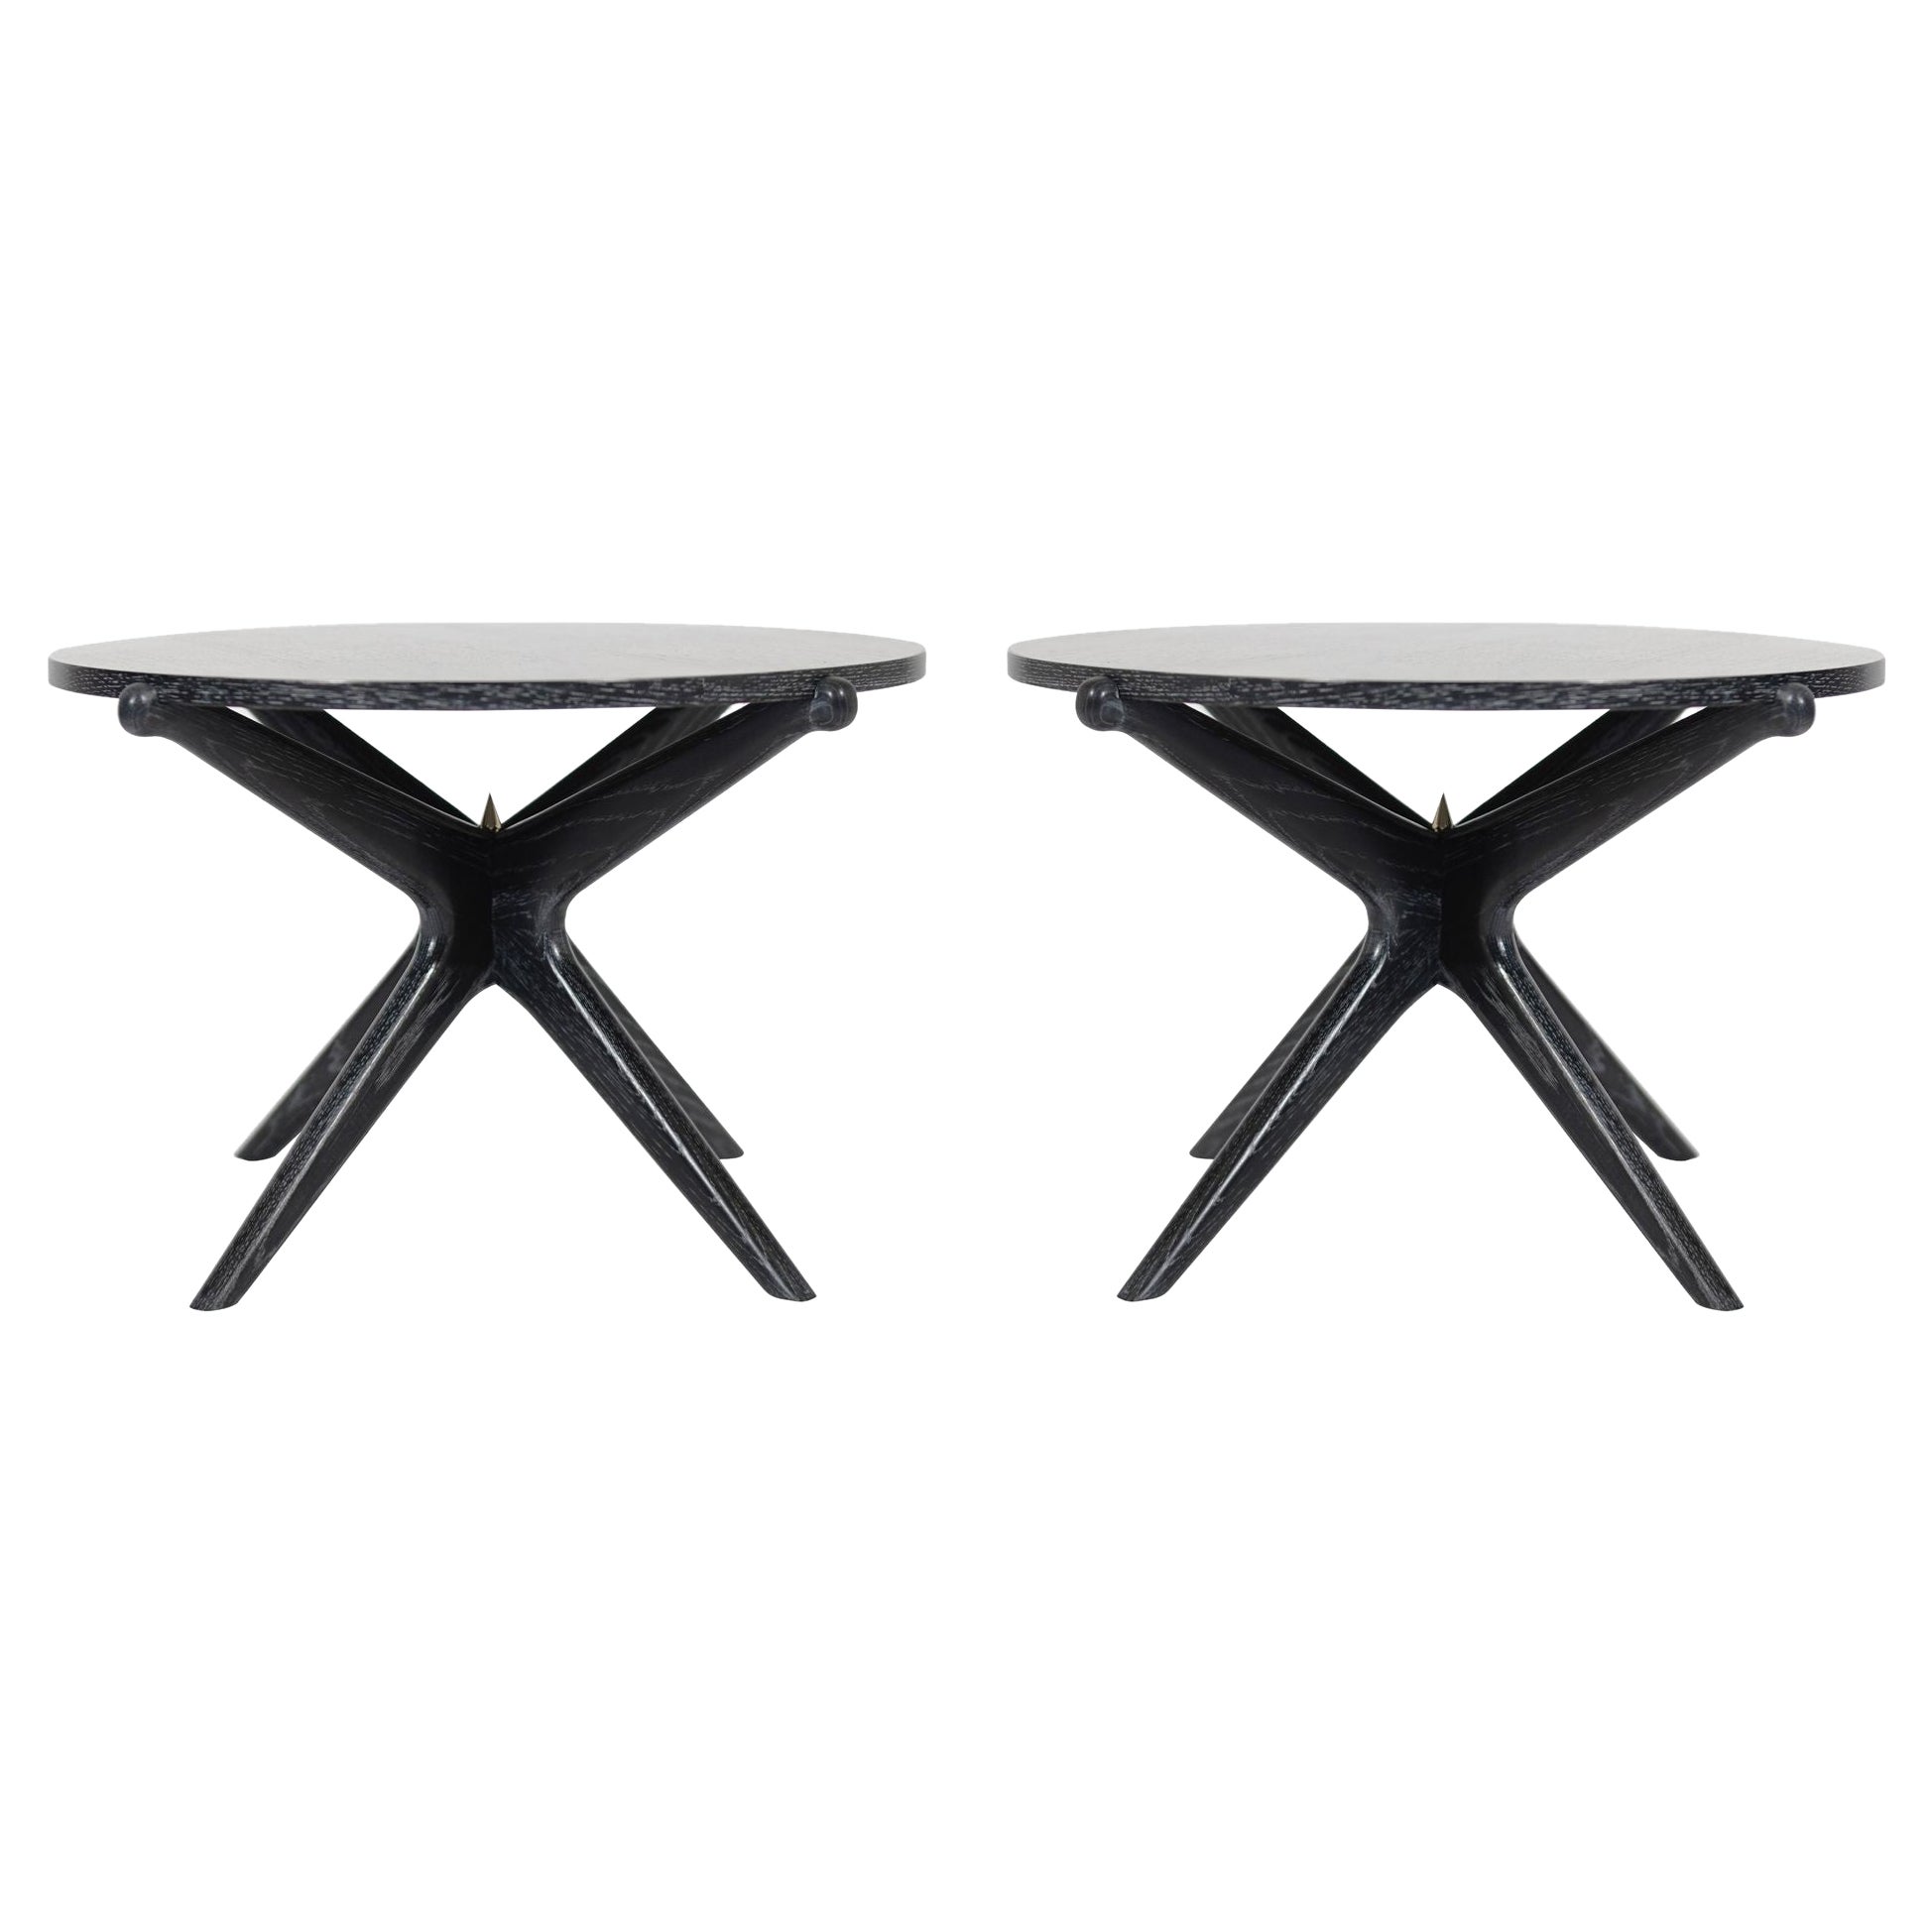 Set of Gazelle End Tables in Limed Oak by Stamford Modern For Sale